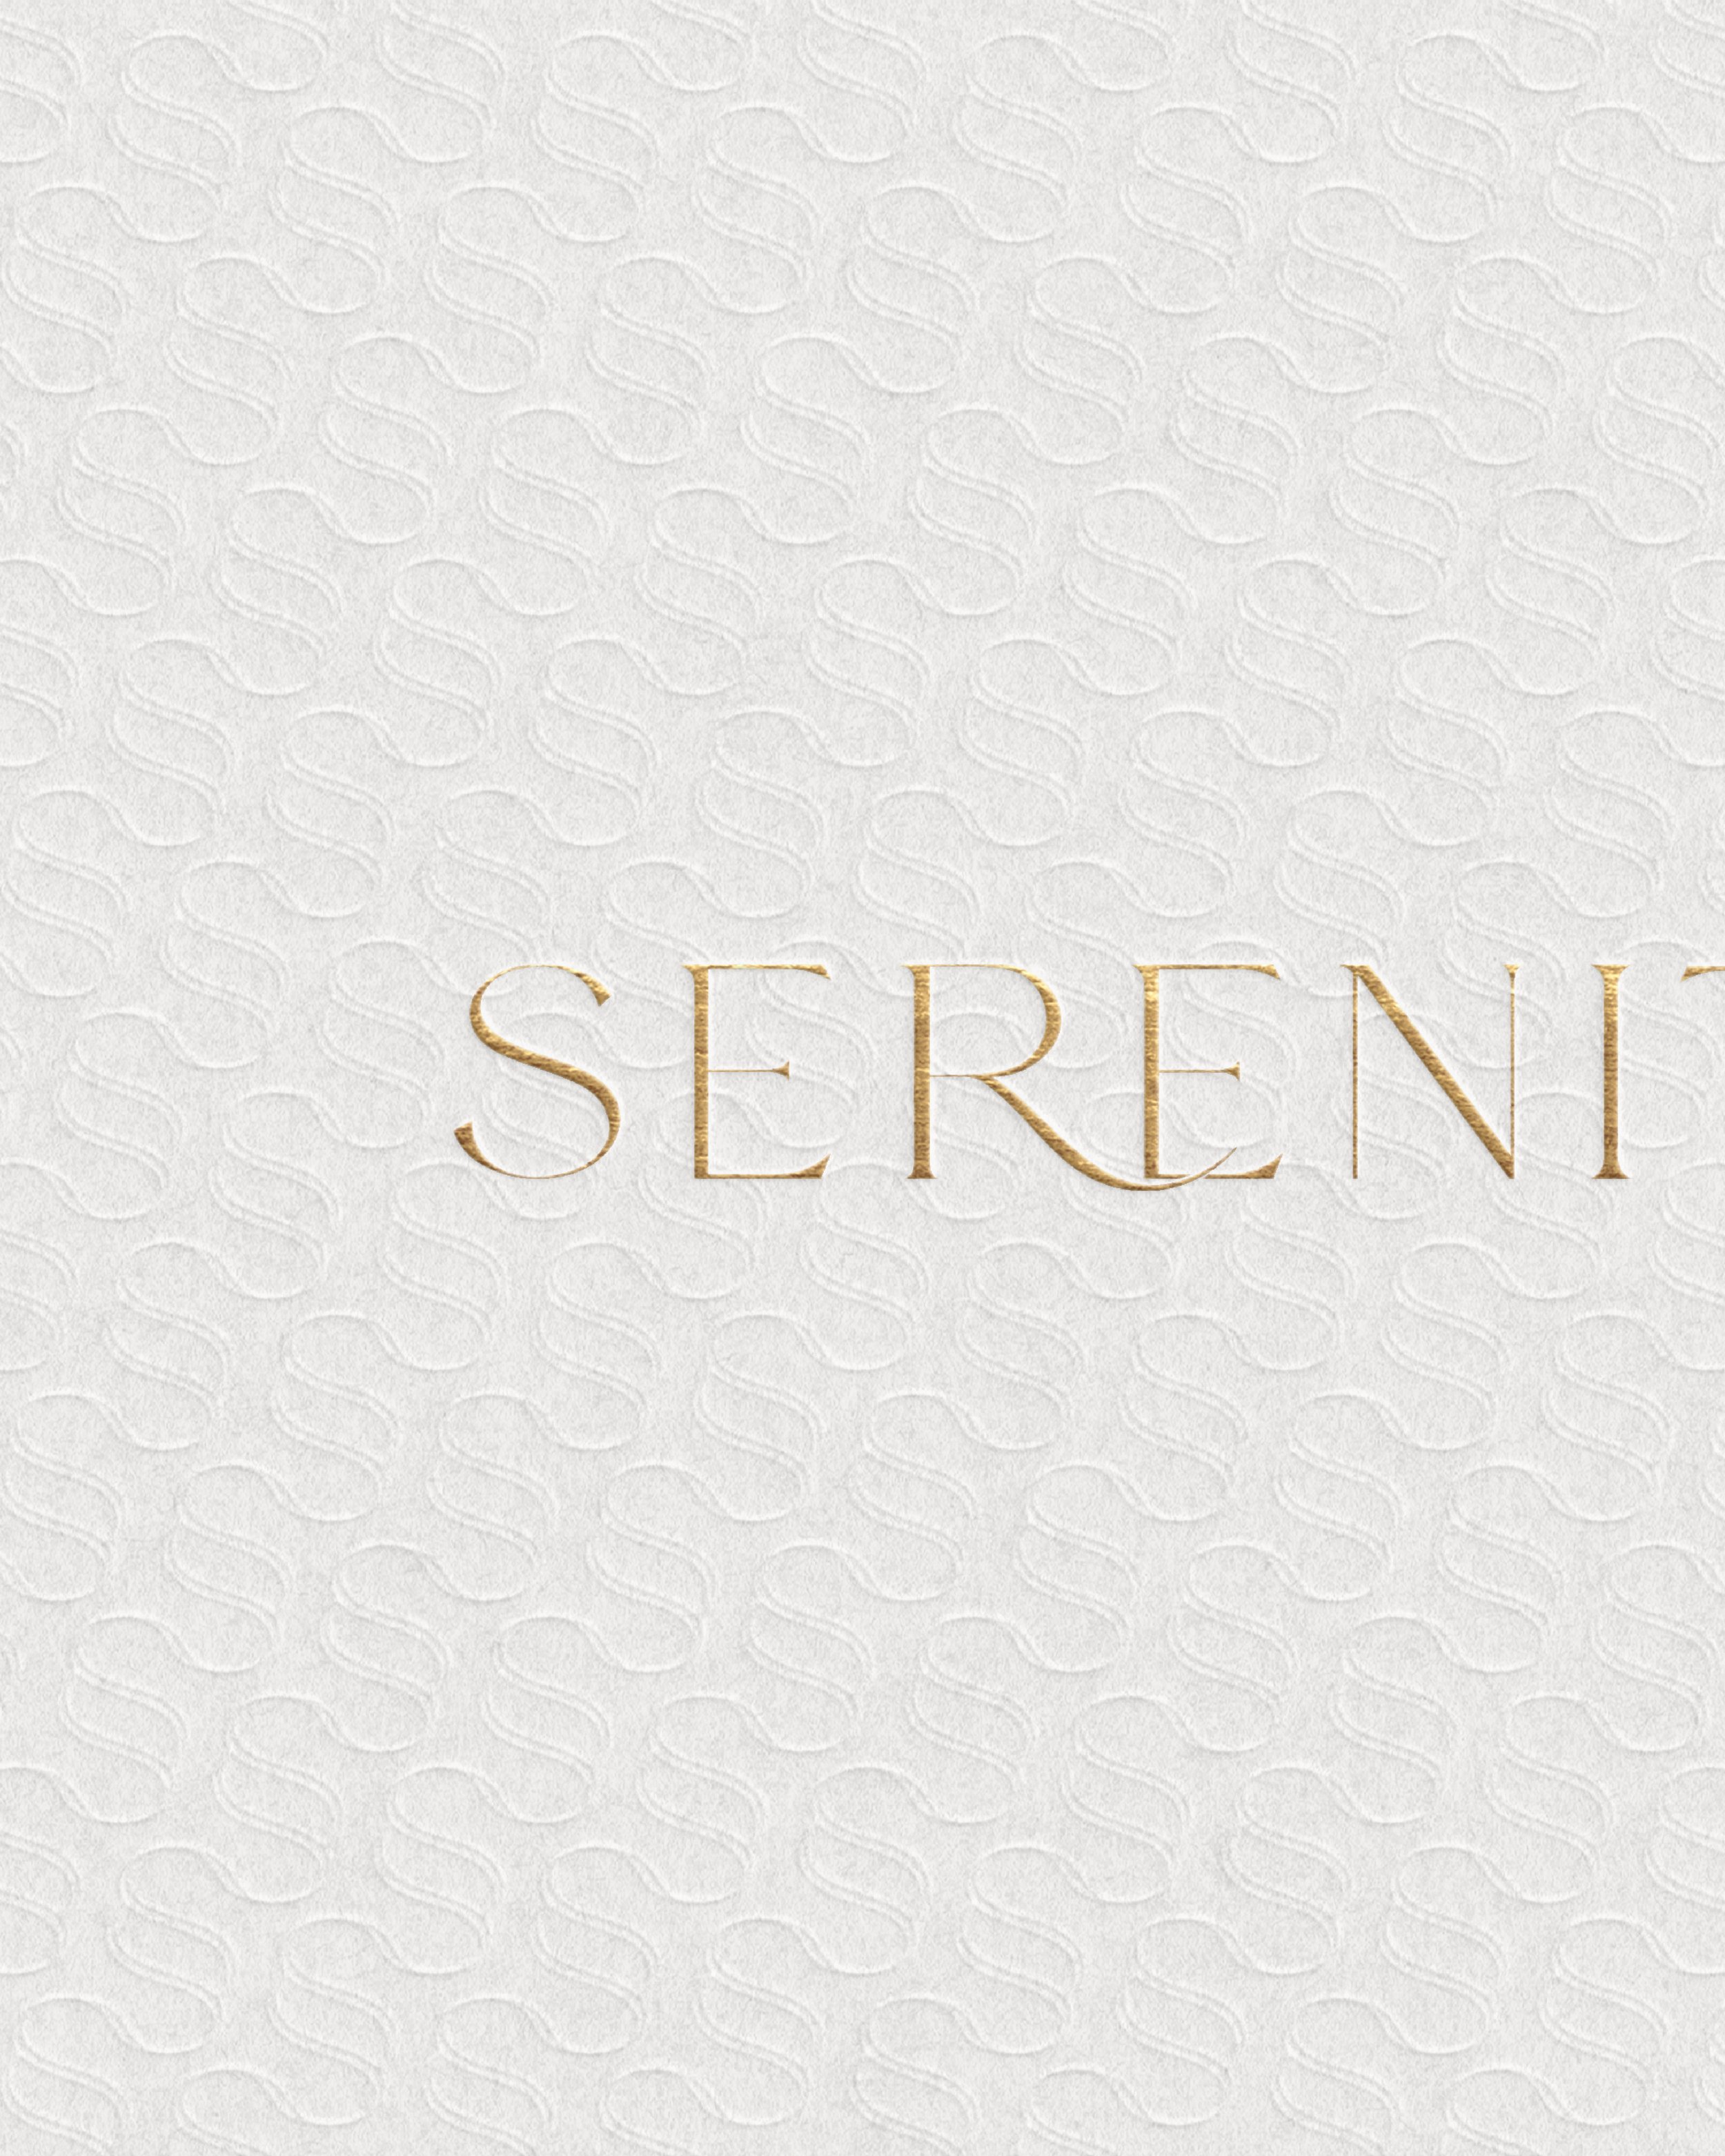 Serenity-03.jpg